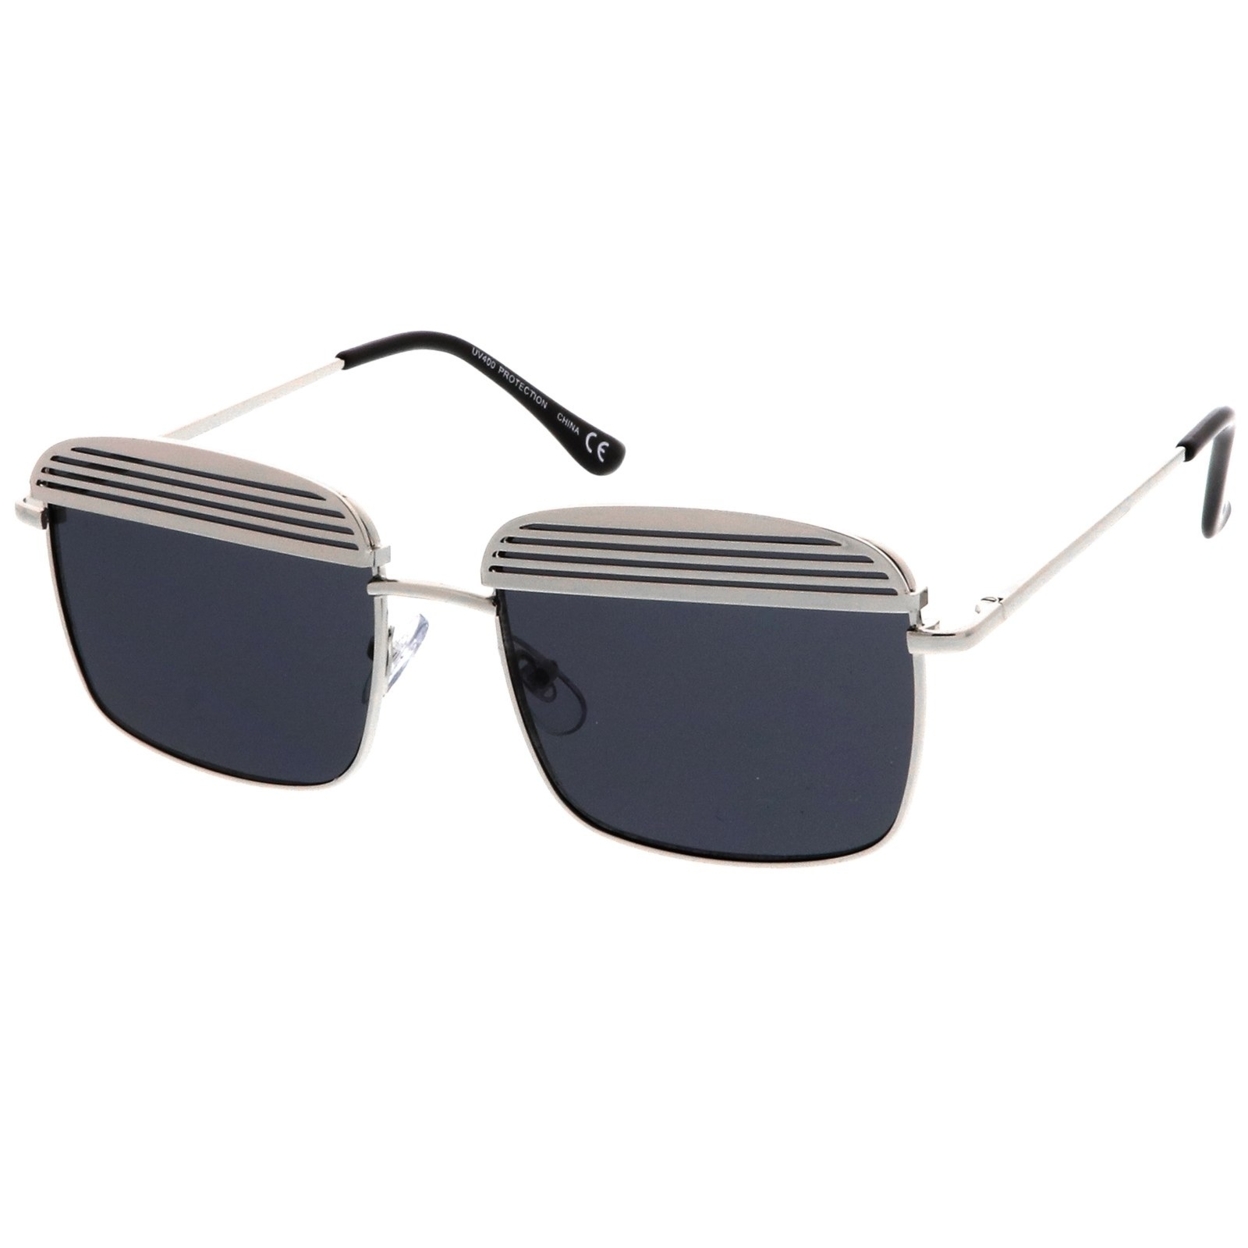 Modern Ultra Slim Arms Metal Cover Super Flat Lens Square Sunglasses 53mm - Matte Black / Smoke